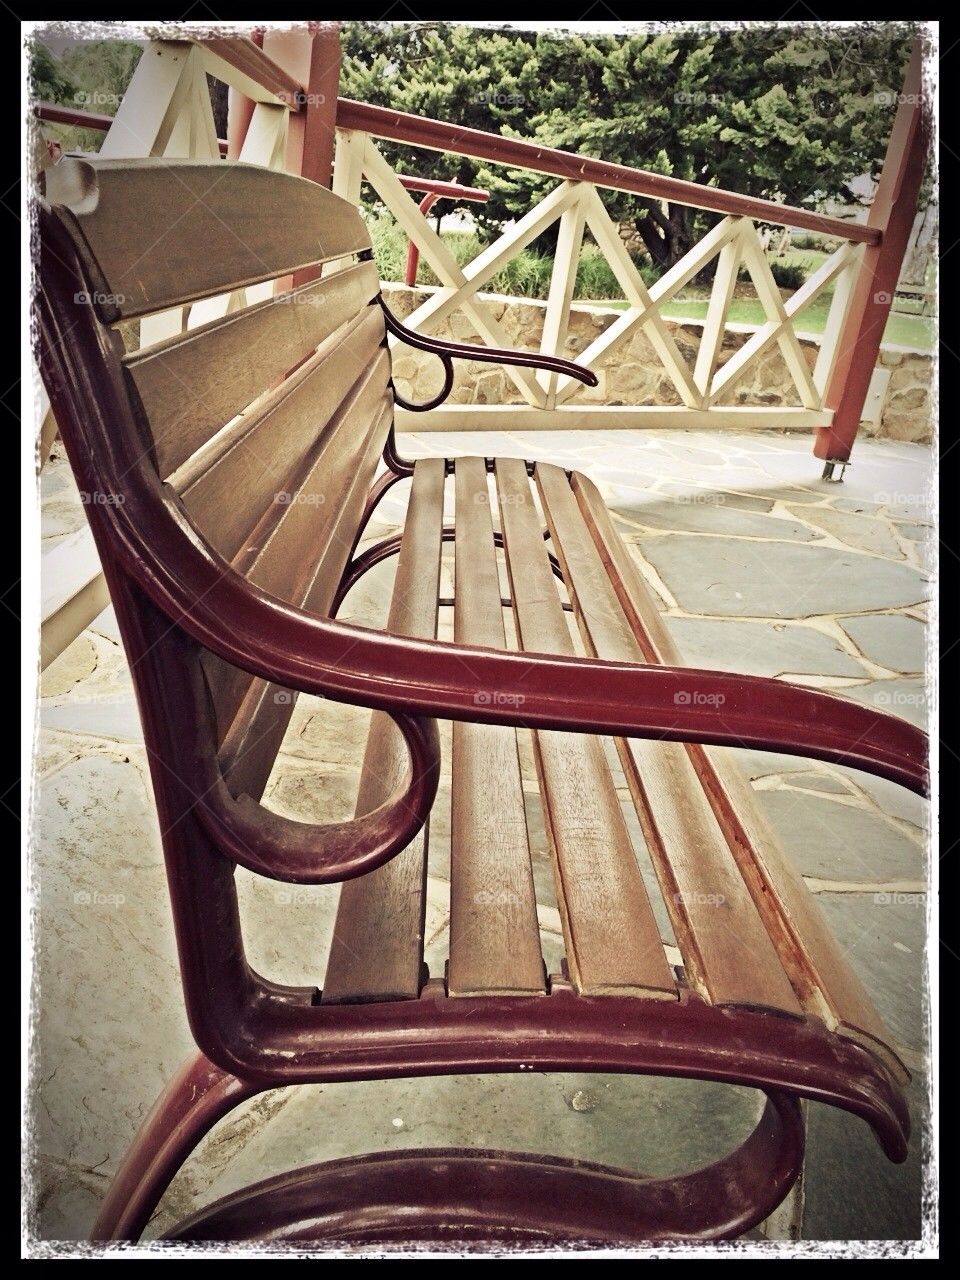 Park bench